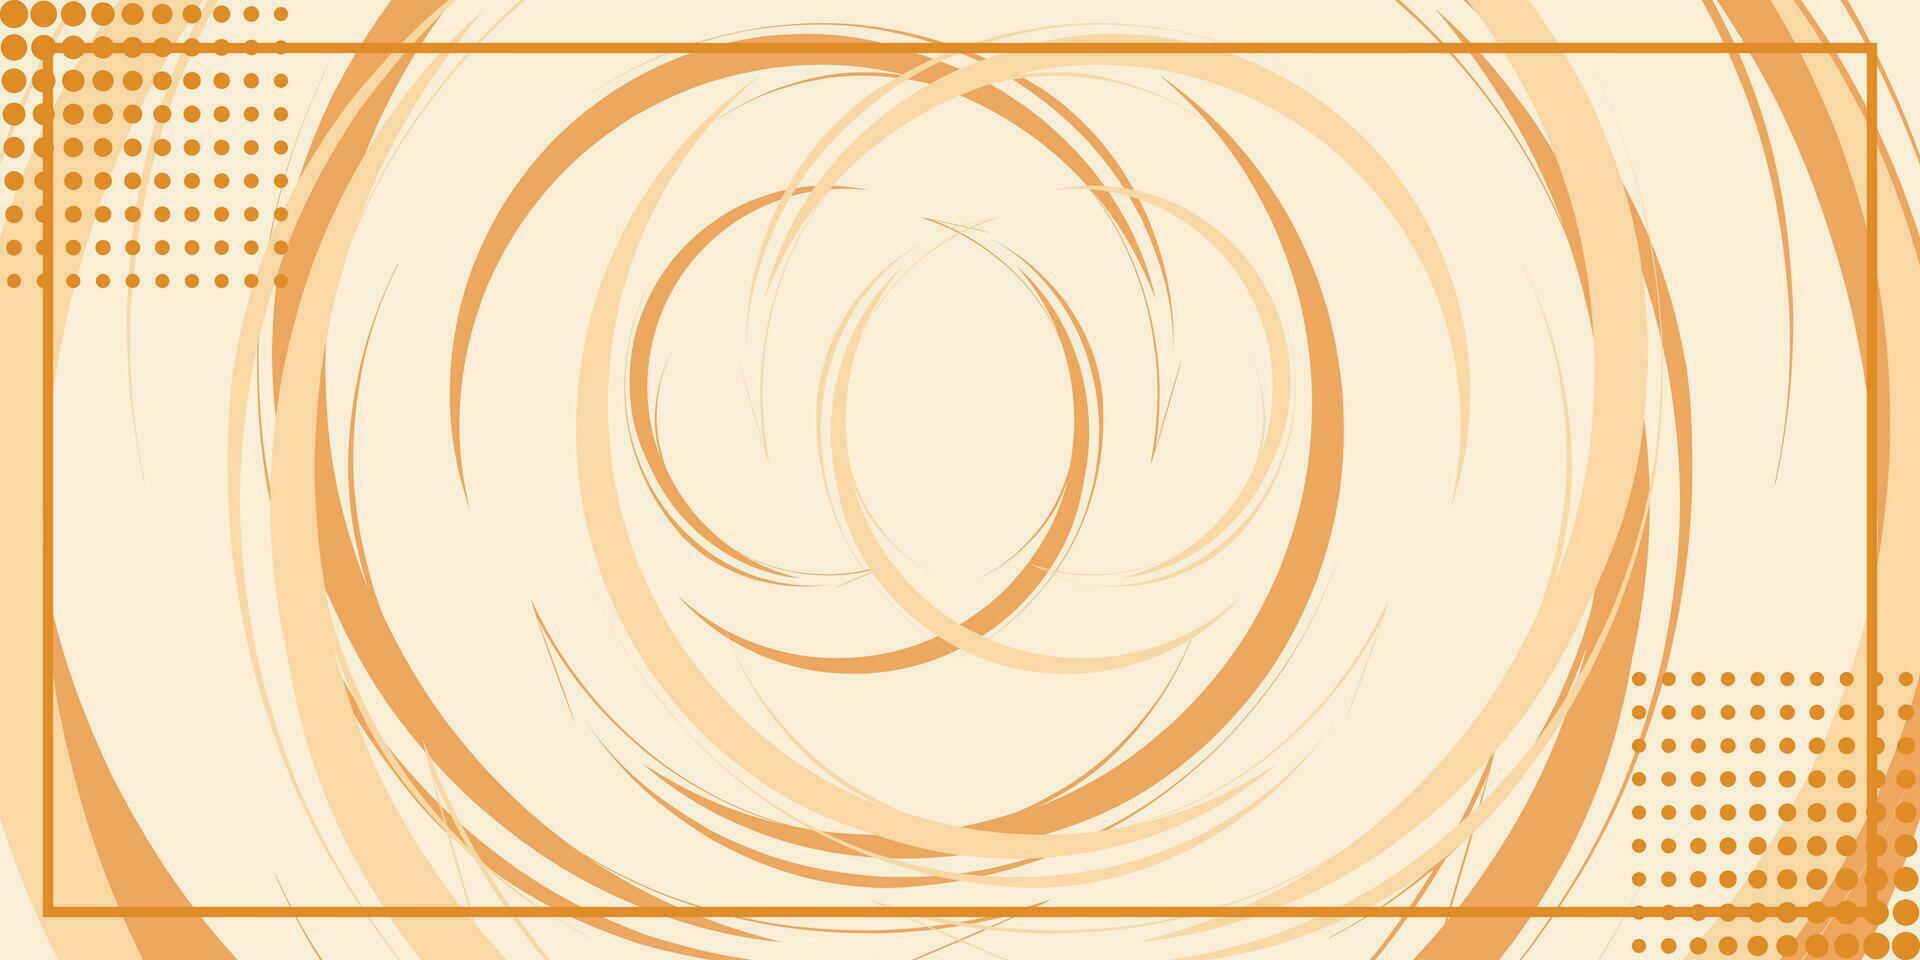 cirkel abstract achtergrond structuur met mooi patroon. vector ontwerp voor banier, groet kaart, brochure, web, sociaal media, poster.